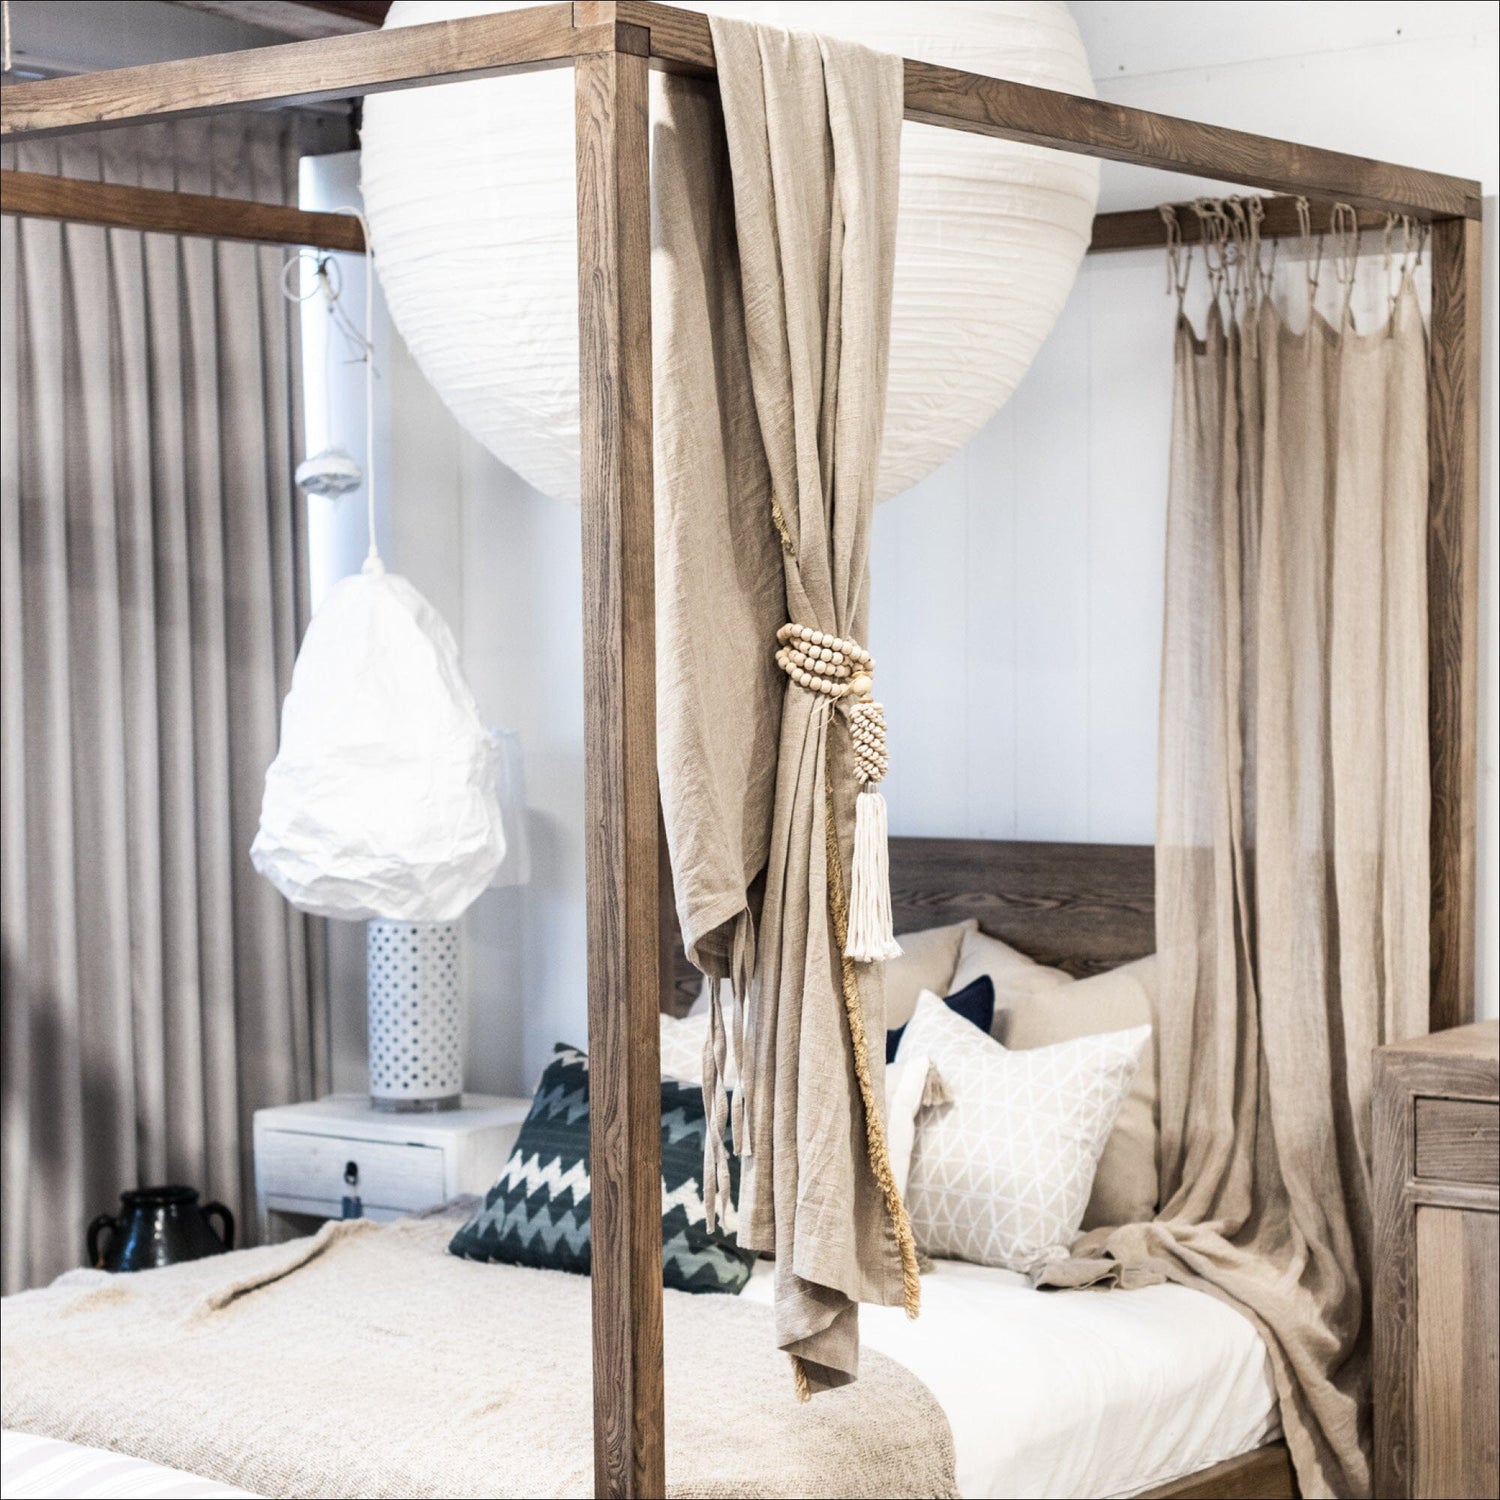 Four Poster Bed - Queen Bedroom Furniture Beachwood Designs 